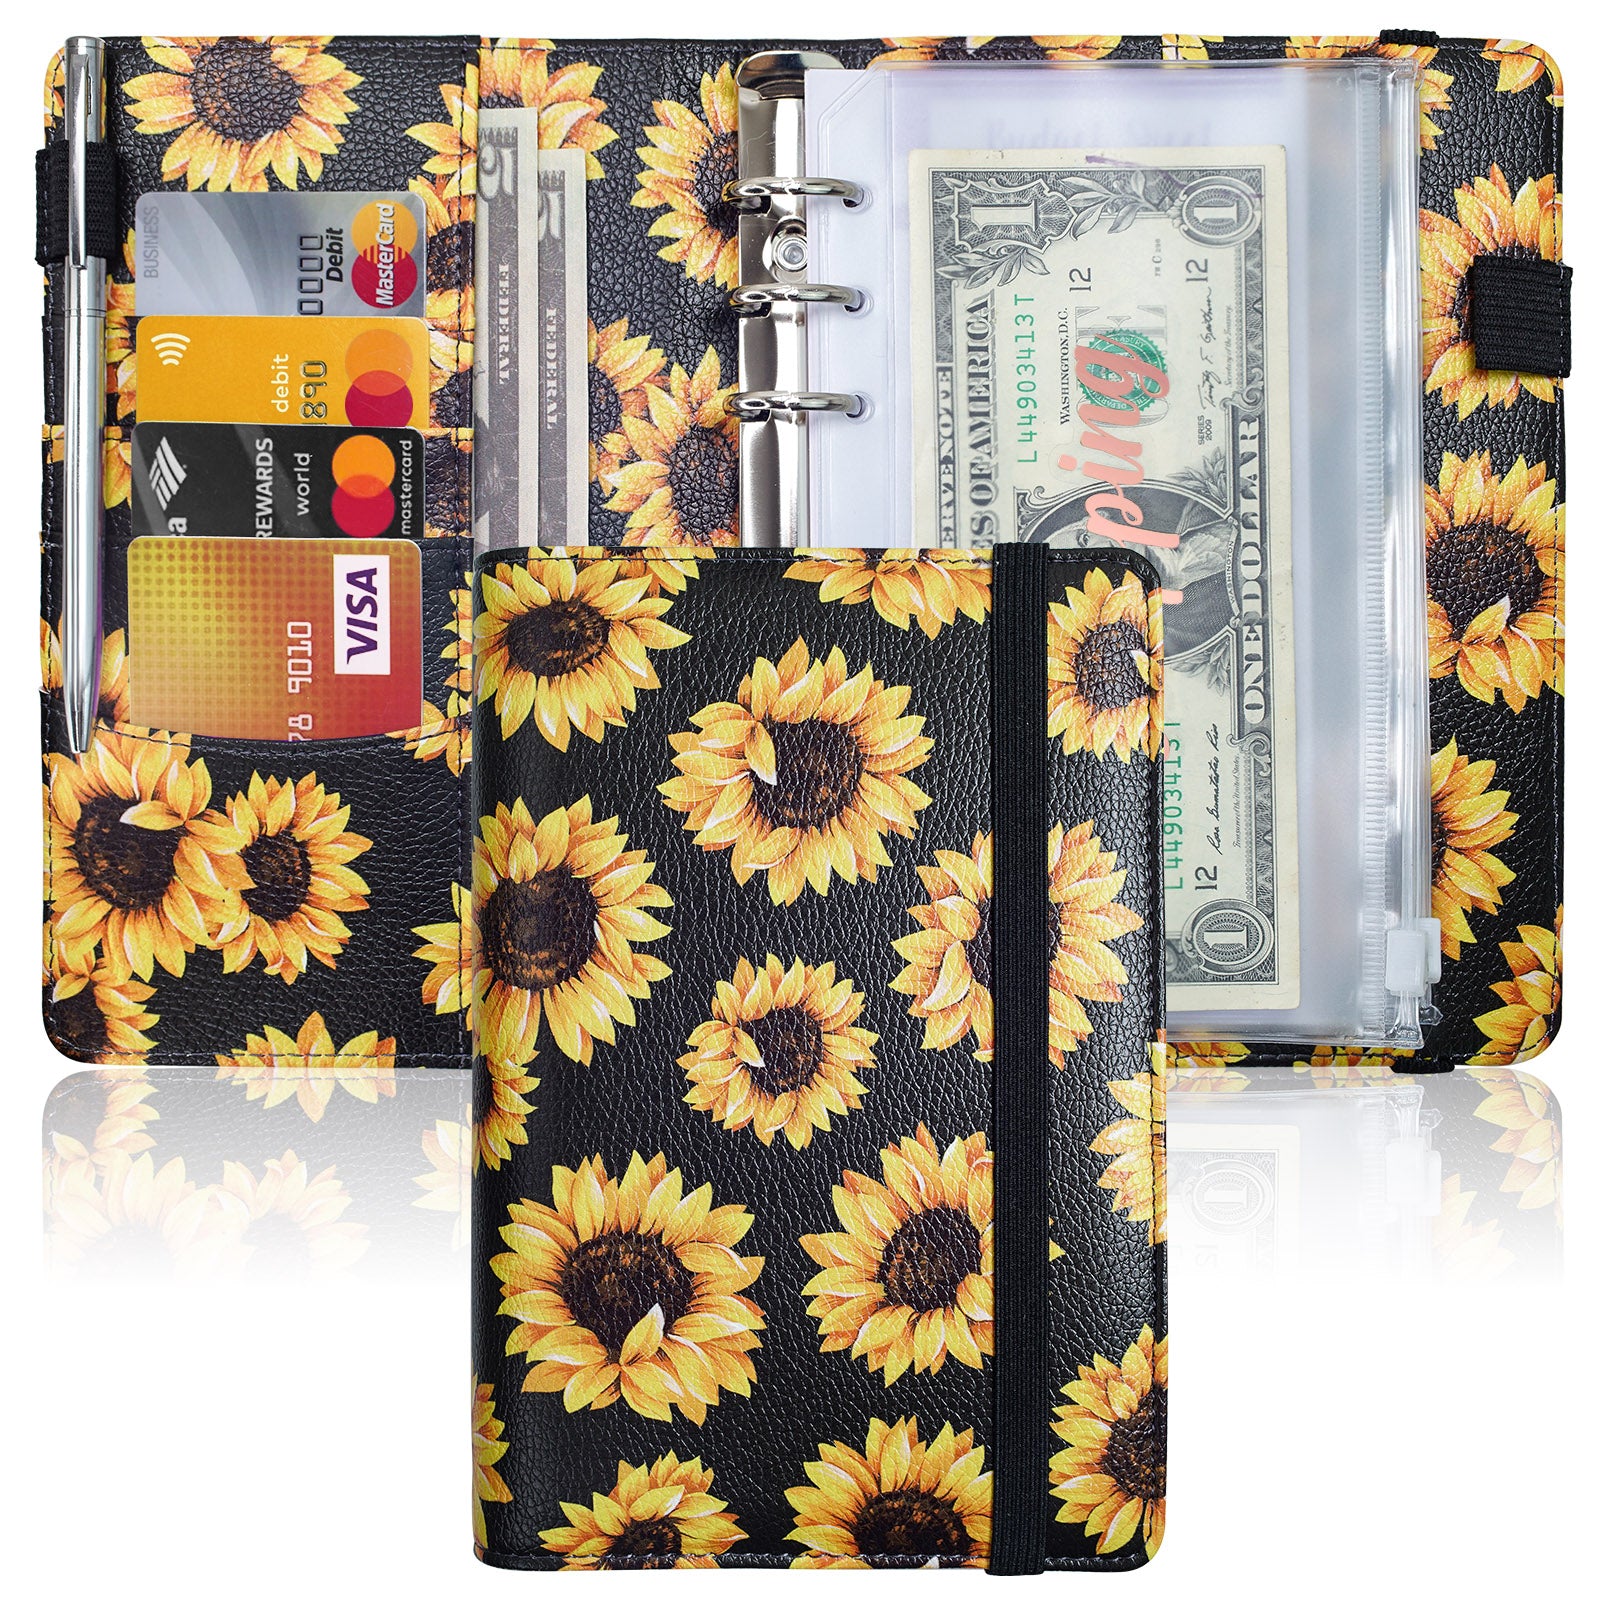 A6 Budget Binder for Money Saving Binder 8 Cash Pockets (Black Sunflower)